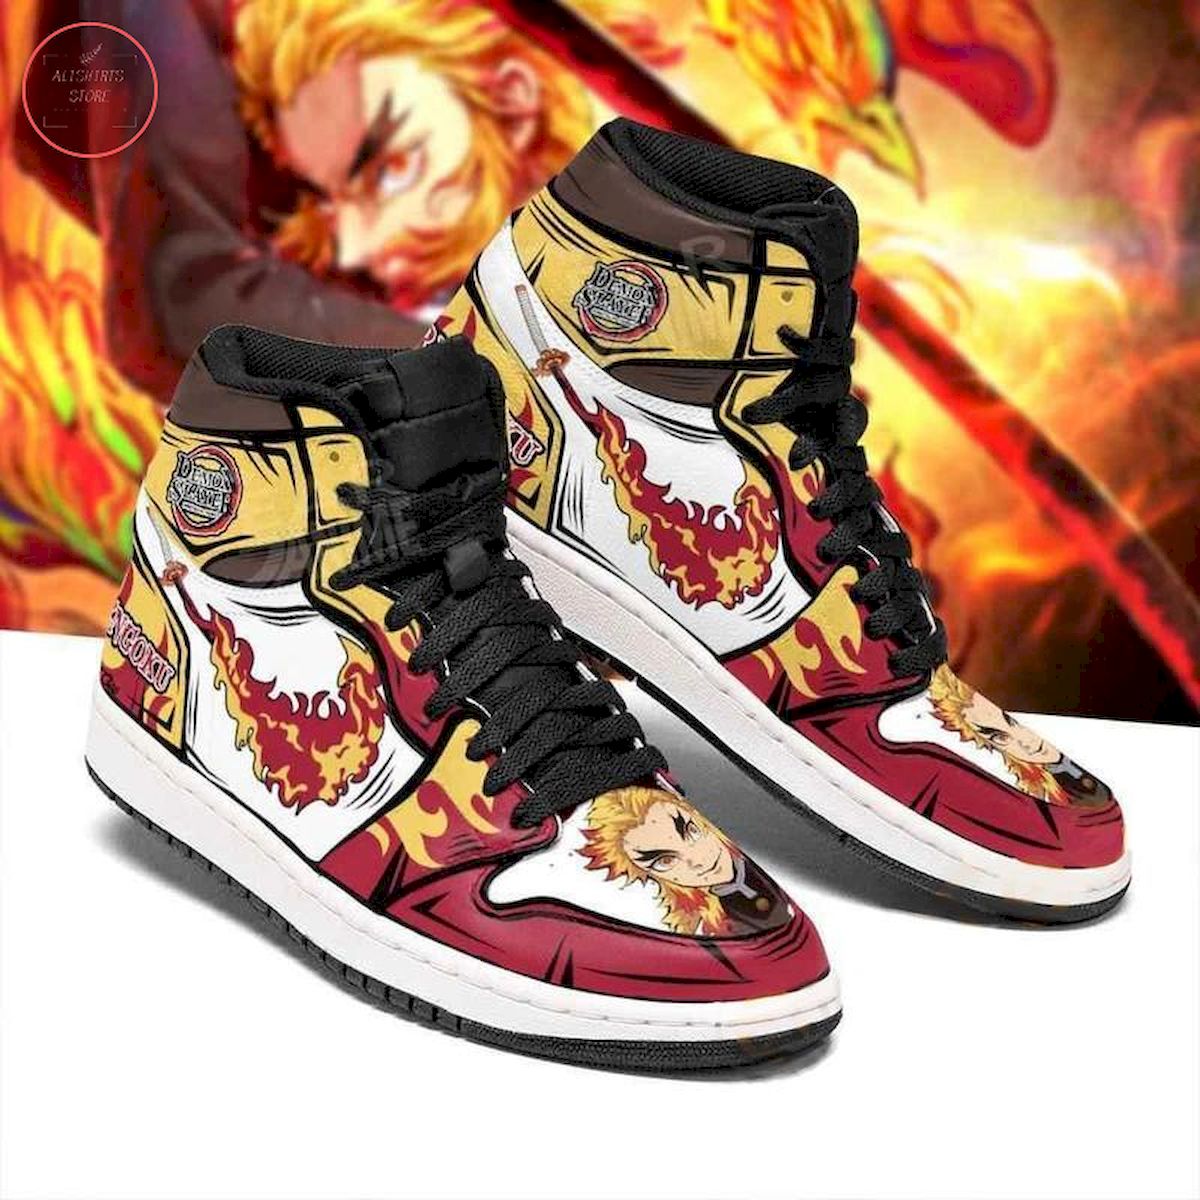 Rengoku Fire Skill Demon Slayer Anime High Air Jordan 1 Sneakers